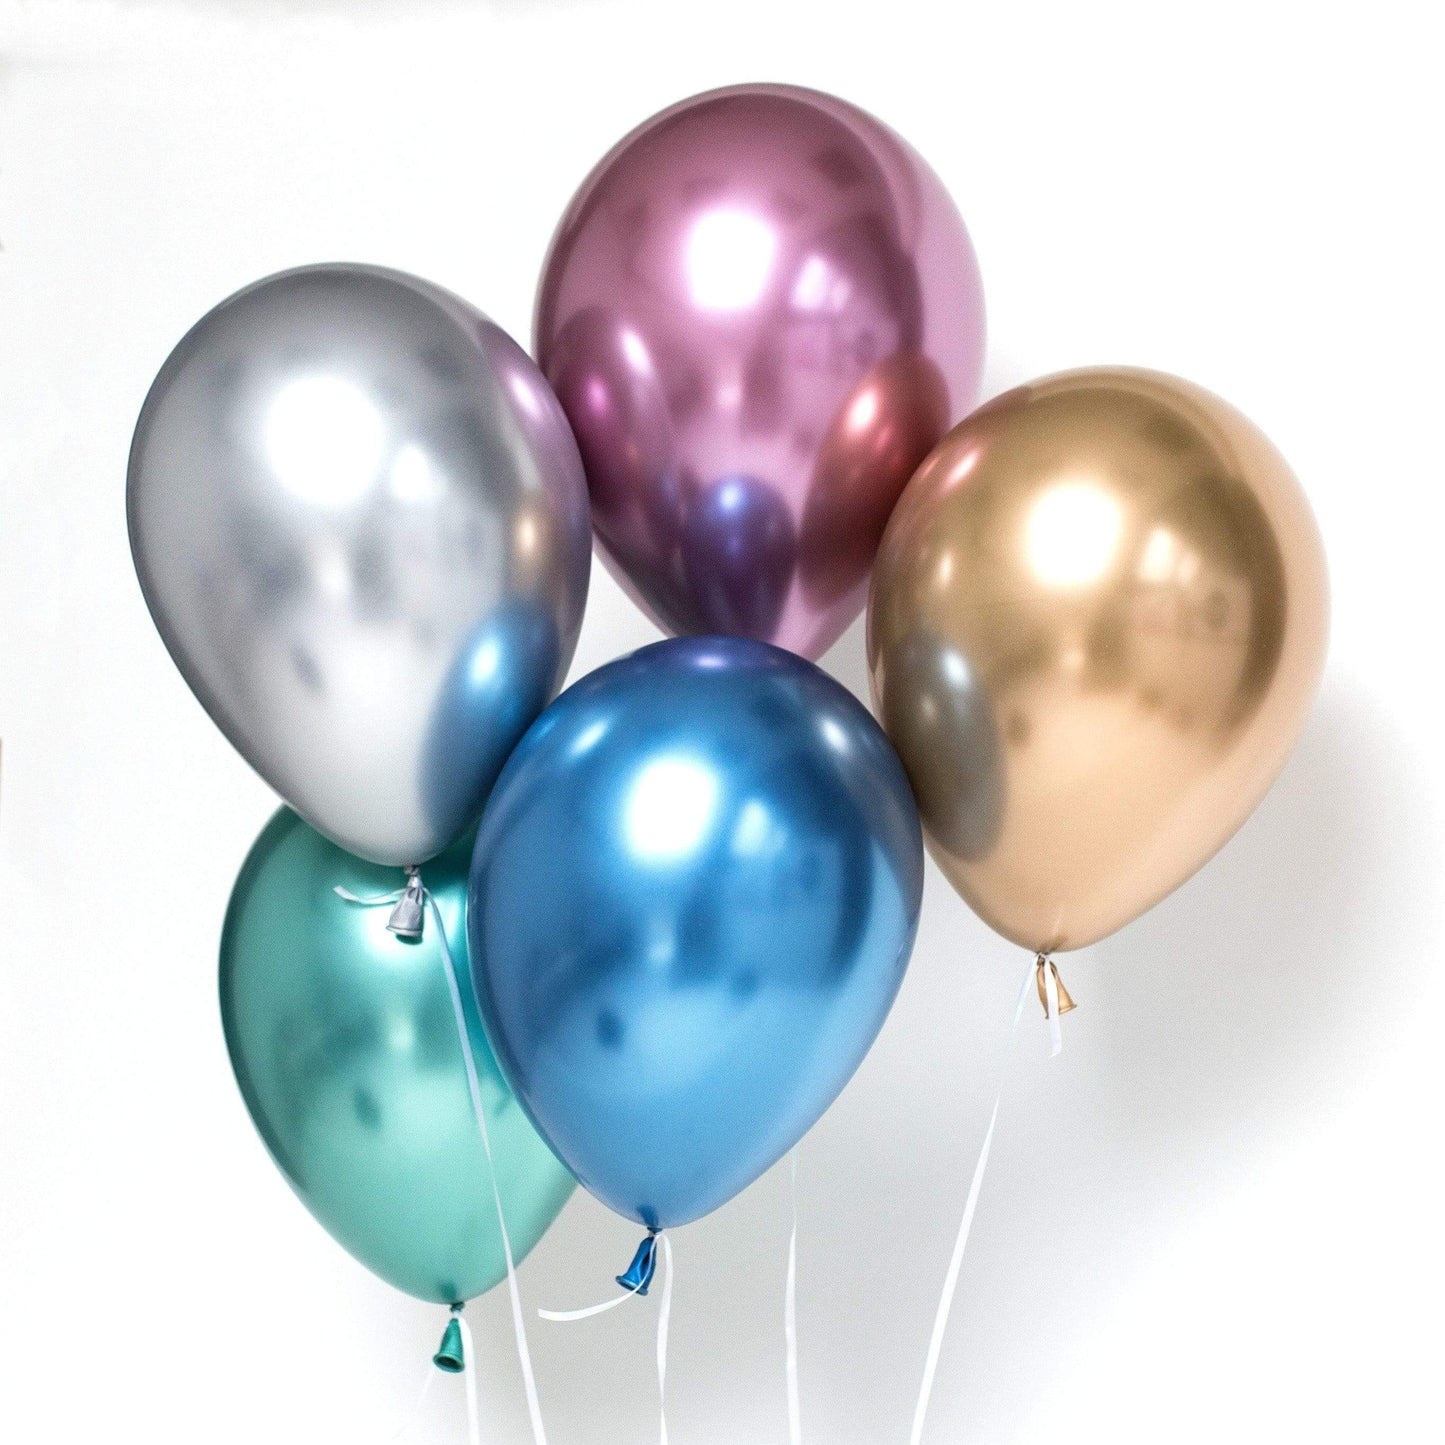 Chrome Balloons l Mattalic Latex Balloons | Qualatex Chrome Balloons Qualatex